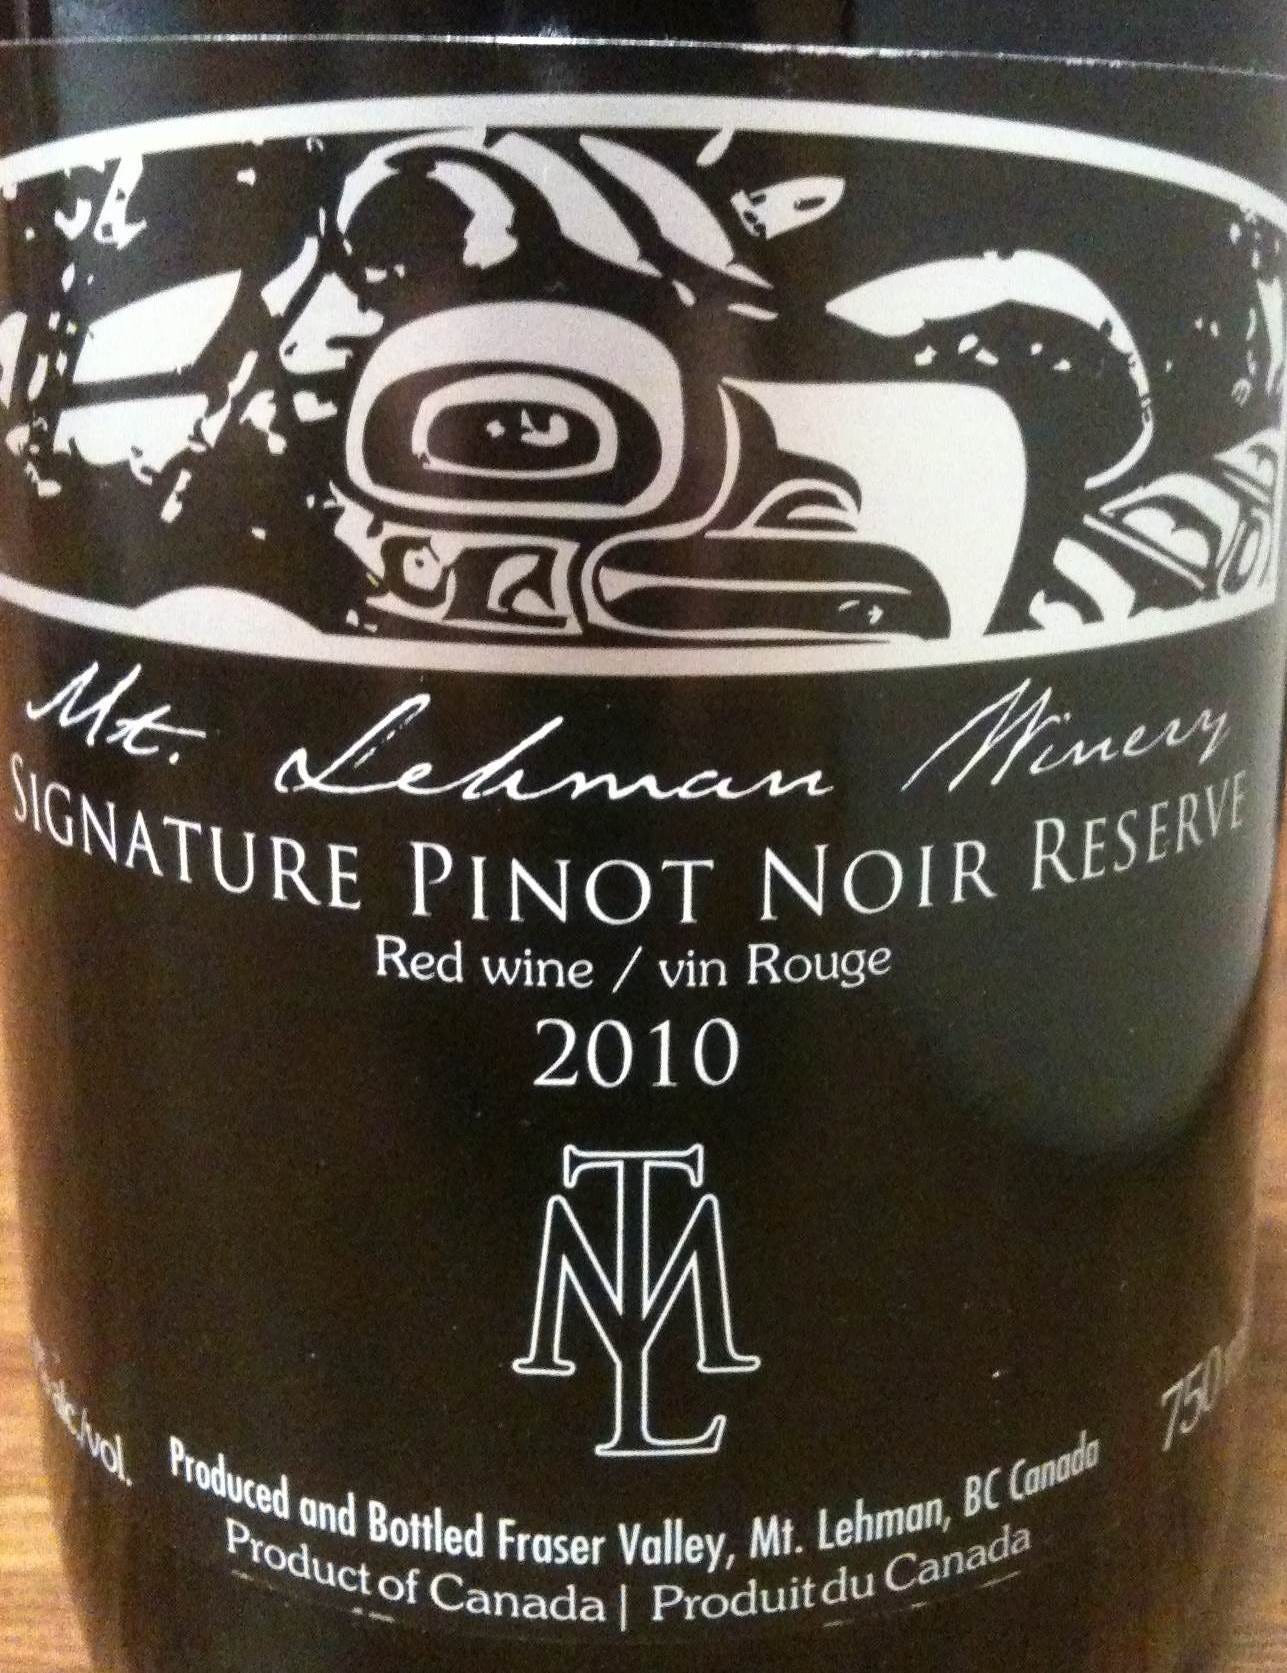 Mt. Lehman Signature Reserve Pinot Noir 2010 Label - BC Pinot Noir Tasting Review 20 